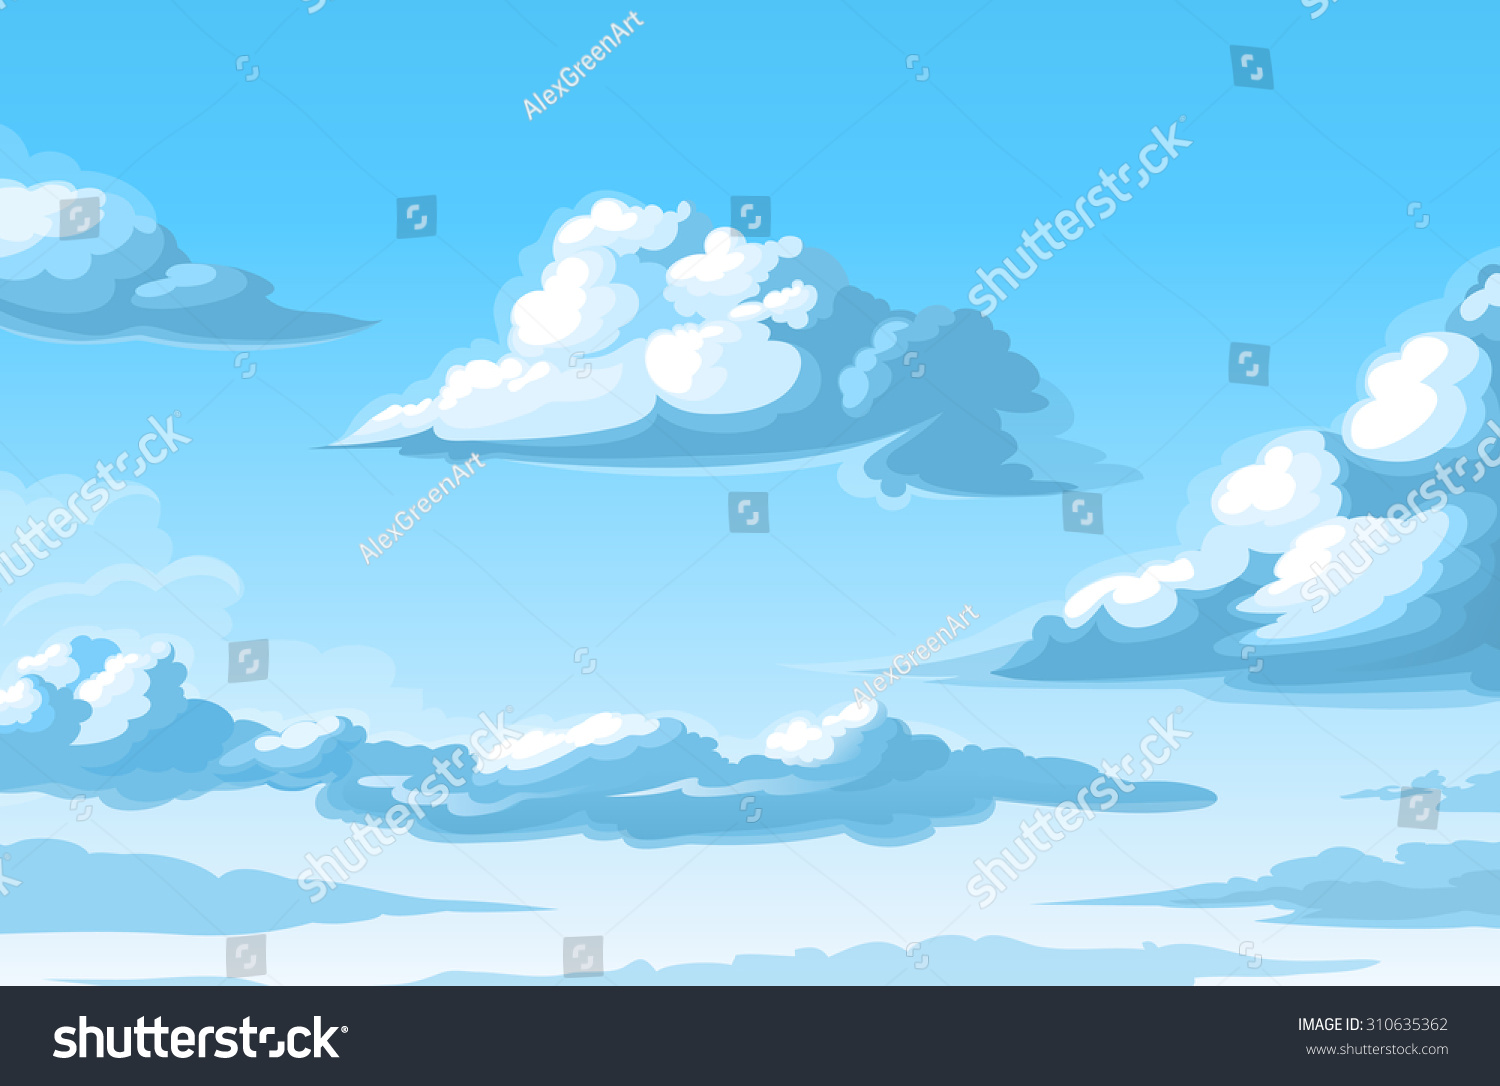 Vector Clouds - 310635362 : Shutterstock